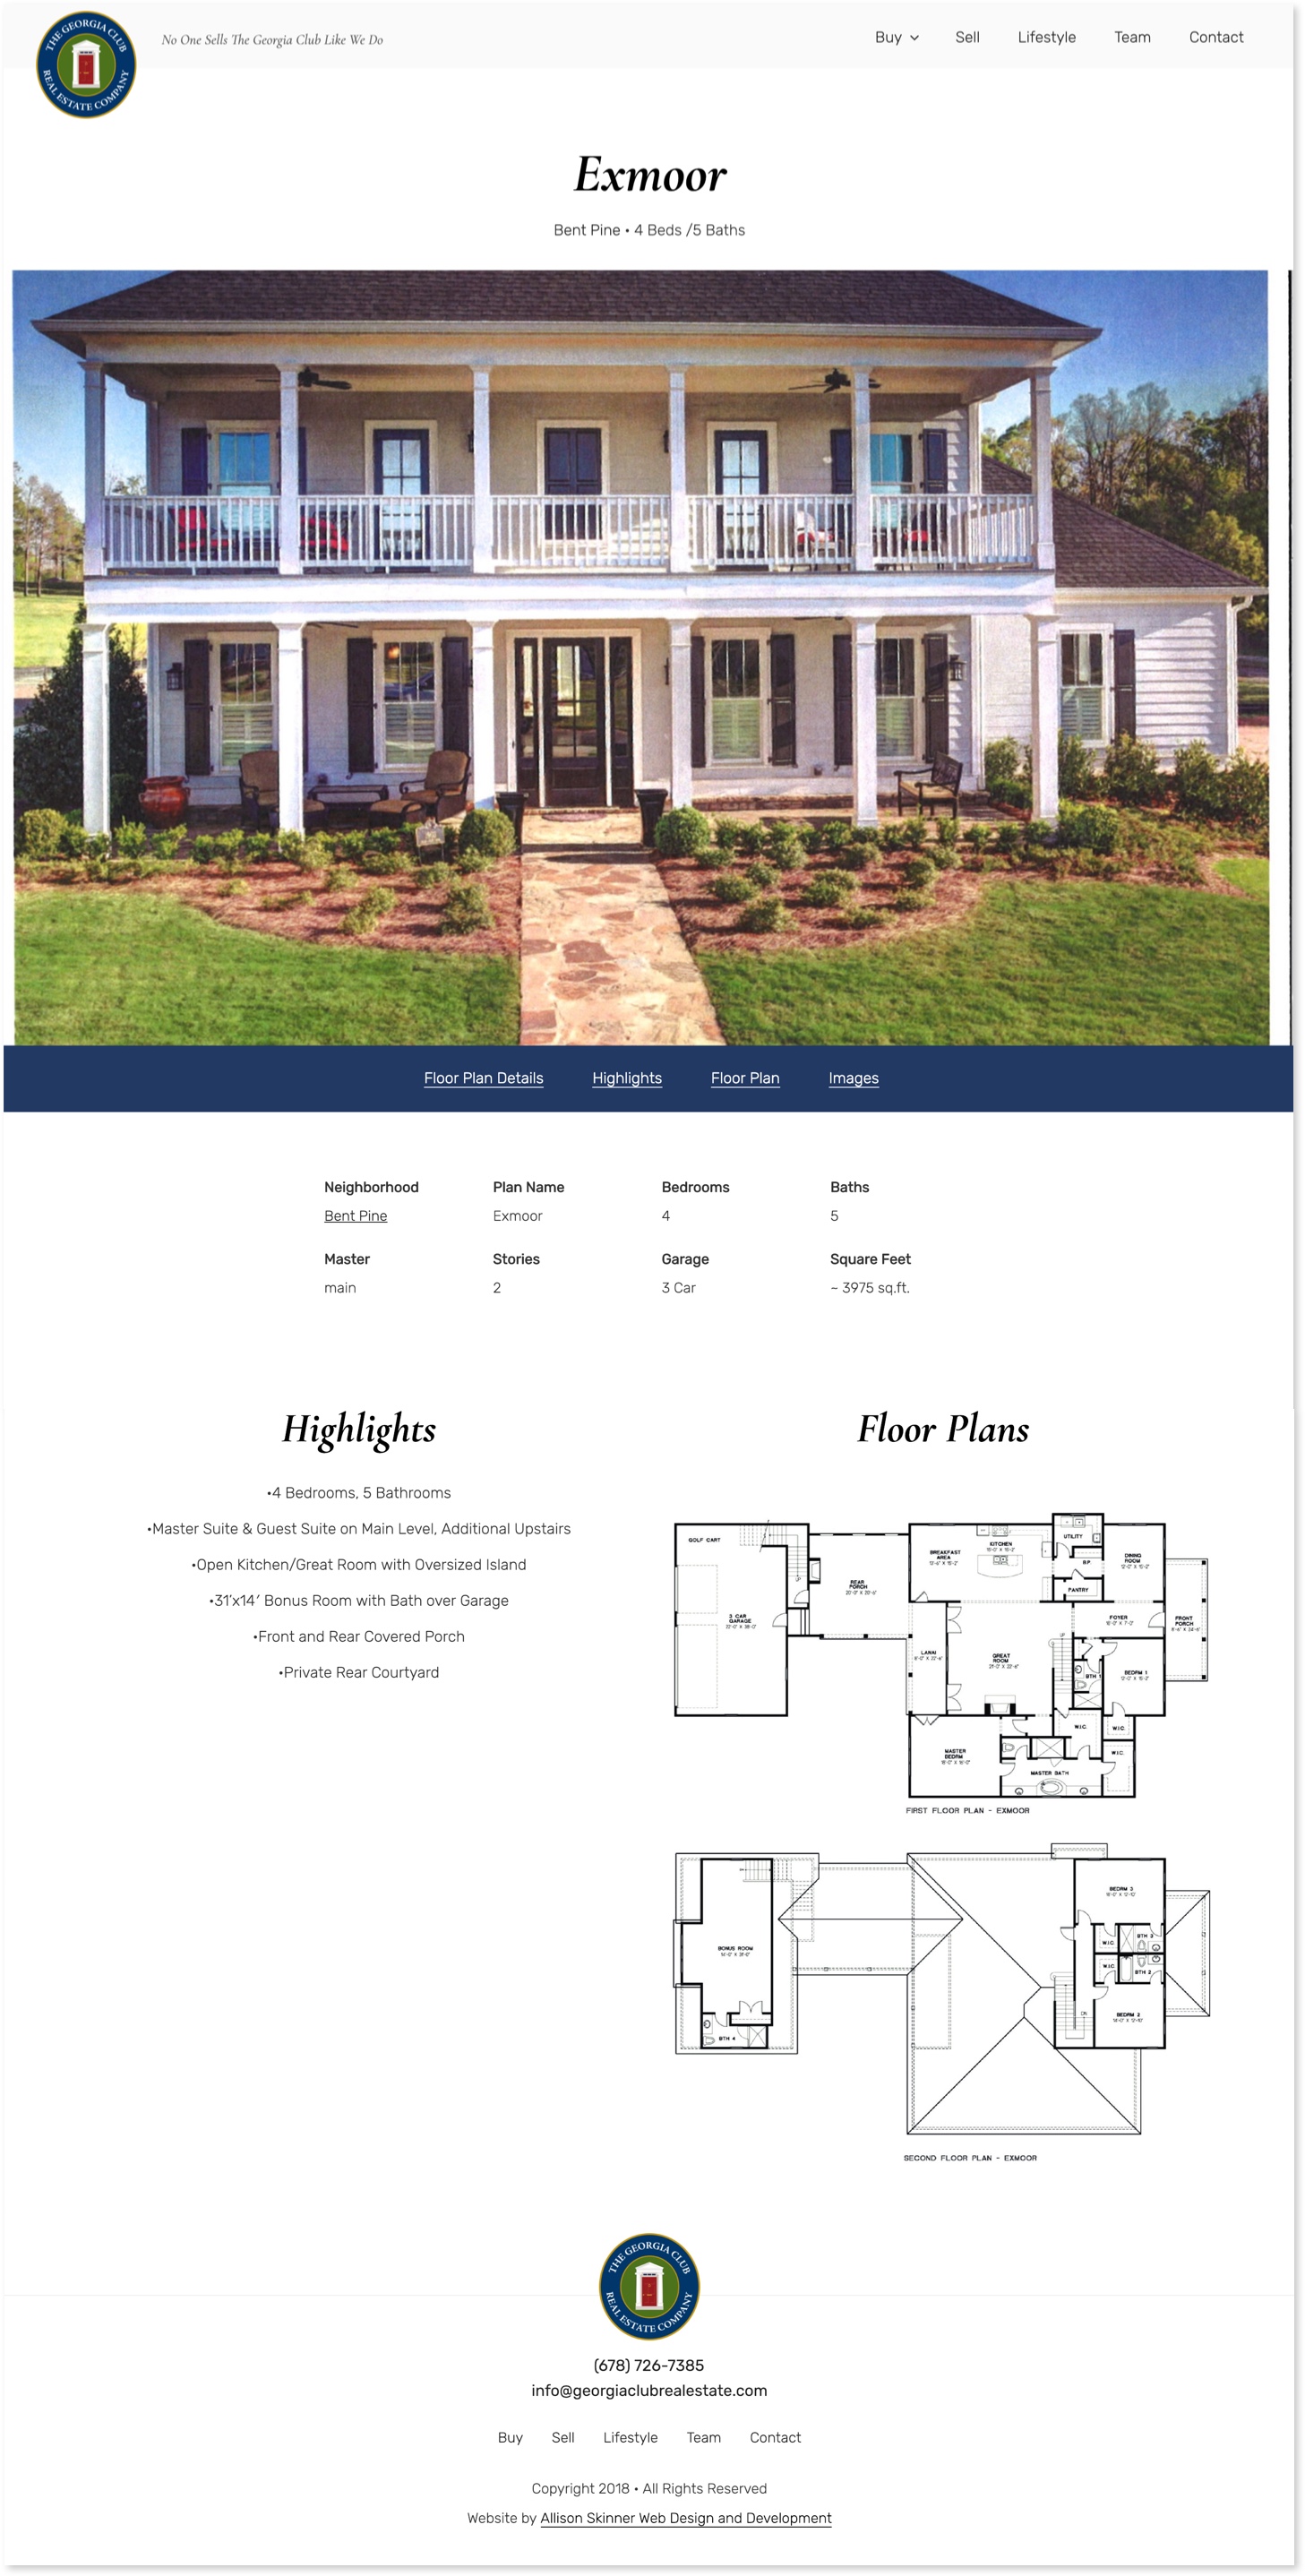 The Georgia Club Real Estate Company Floor Plans single page